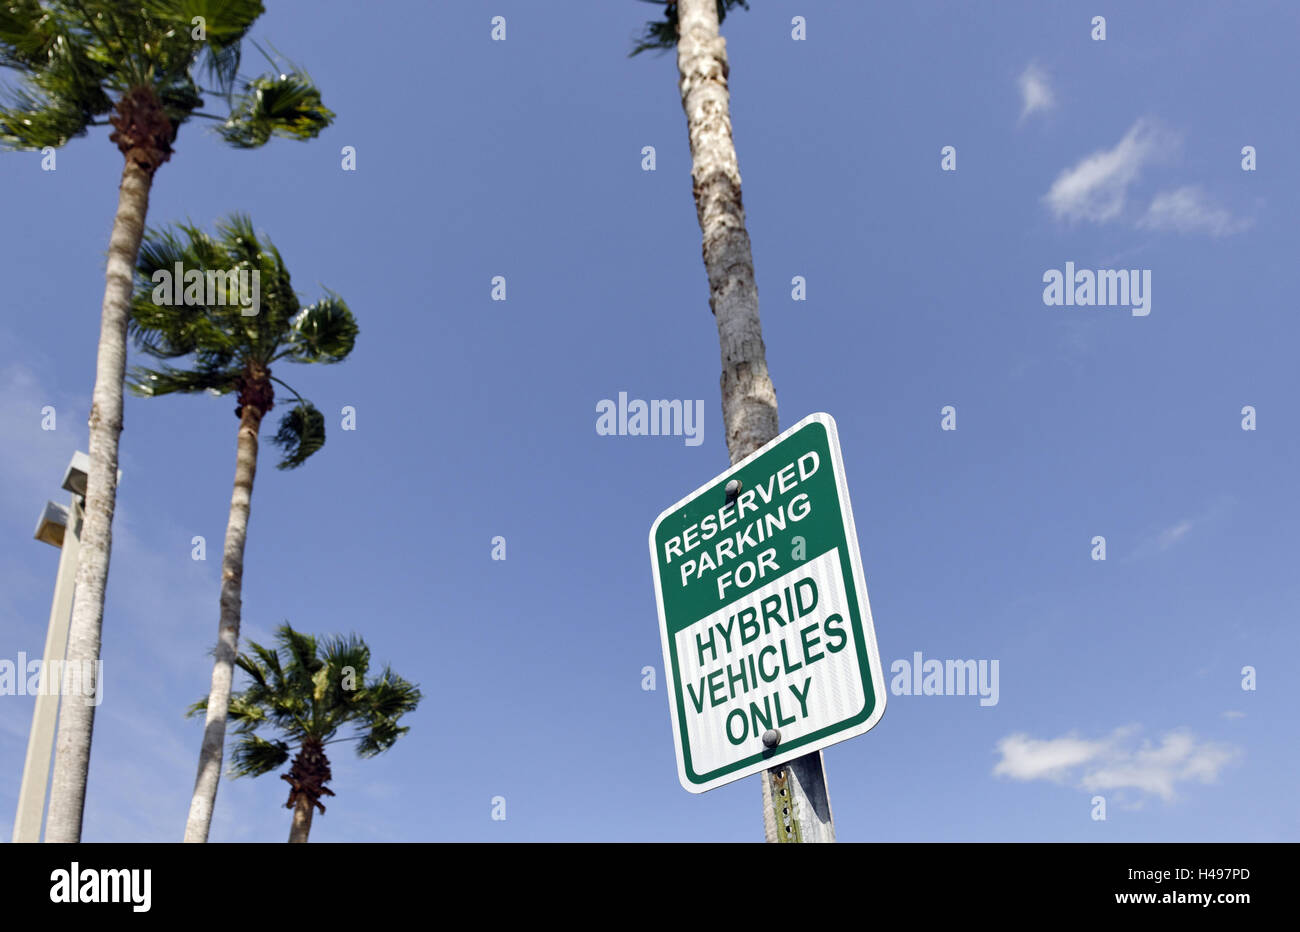 green marked parking lot only for Hybrid vehicles, Key Largo, Florida Keys, Florida, USA, Stock Photo